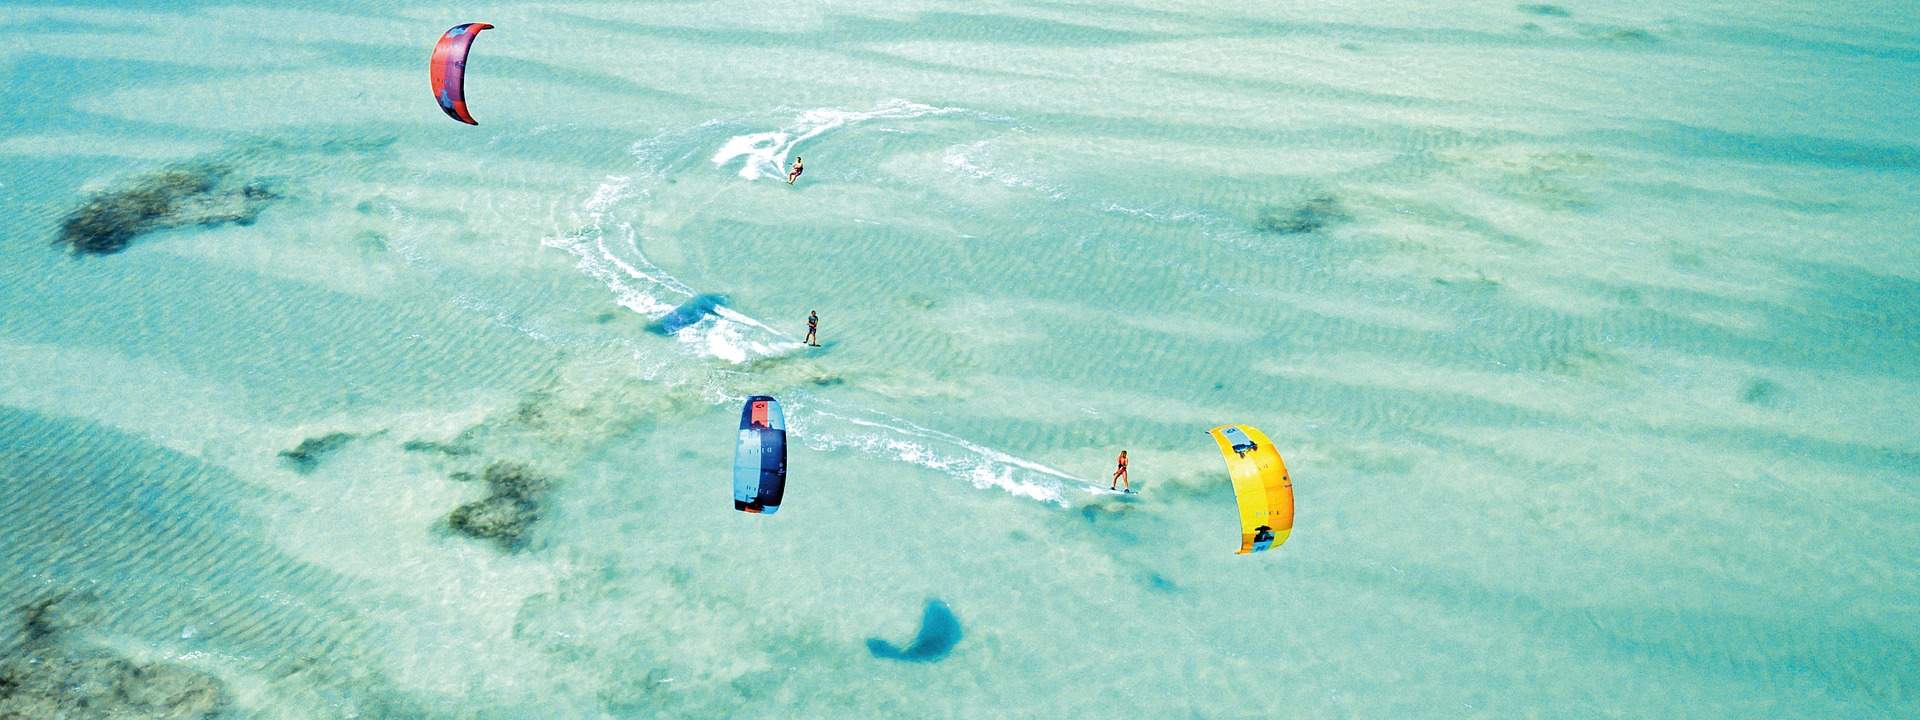 The best spot to kitesurf in the Caribbean